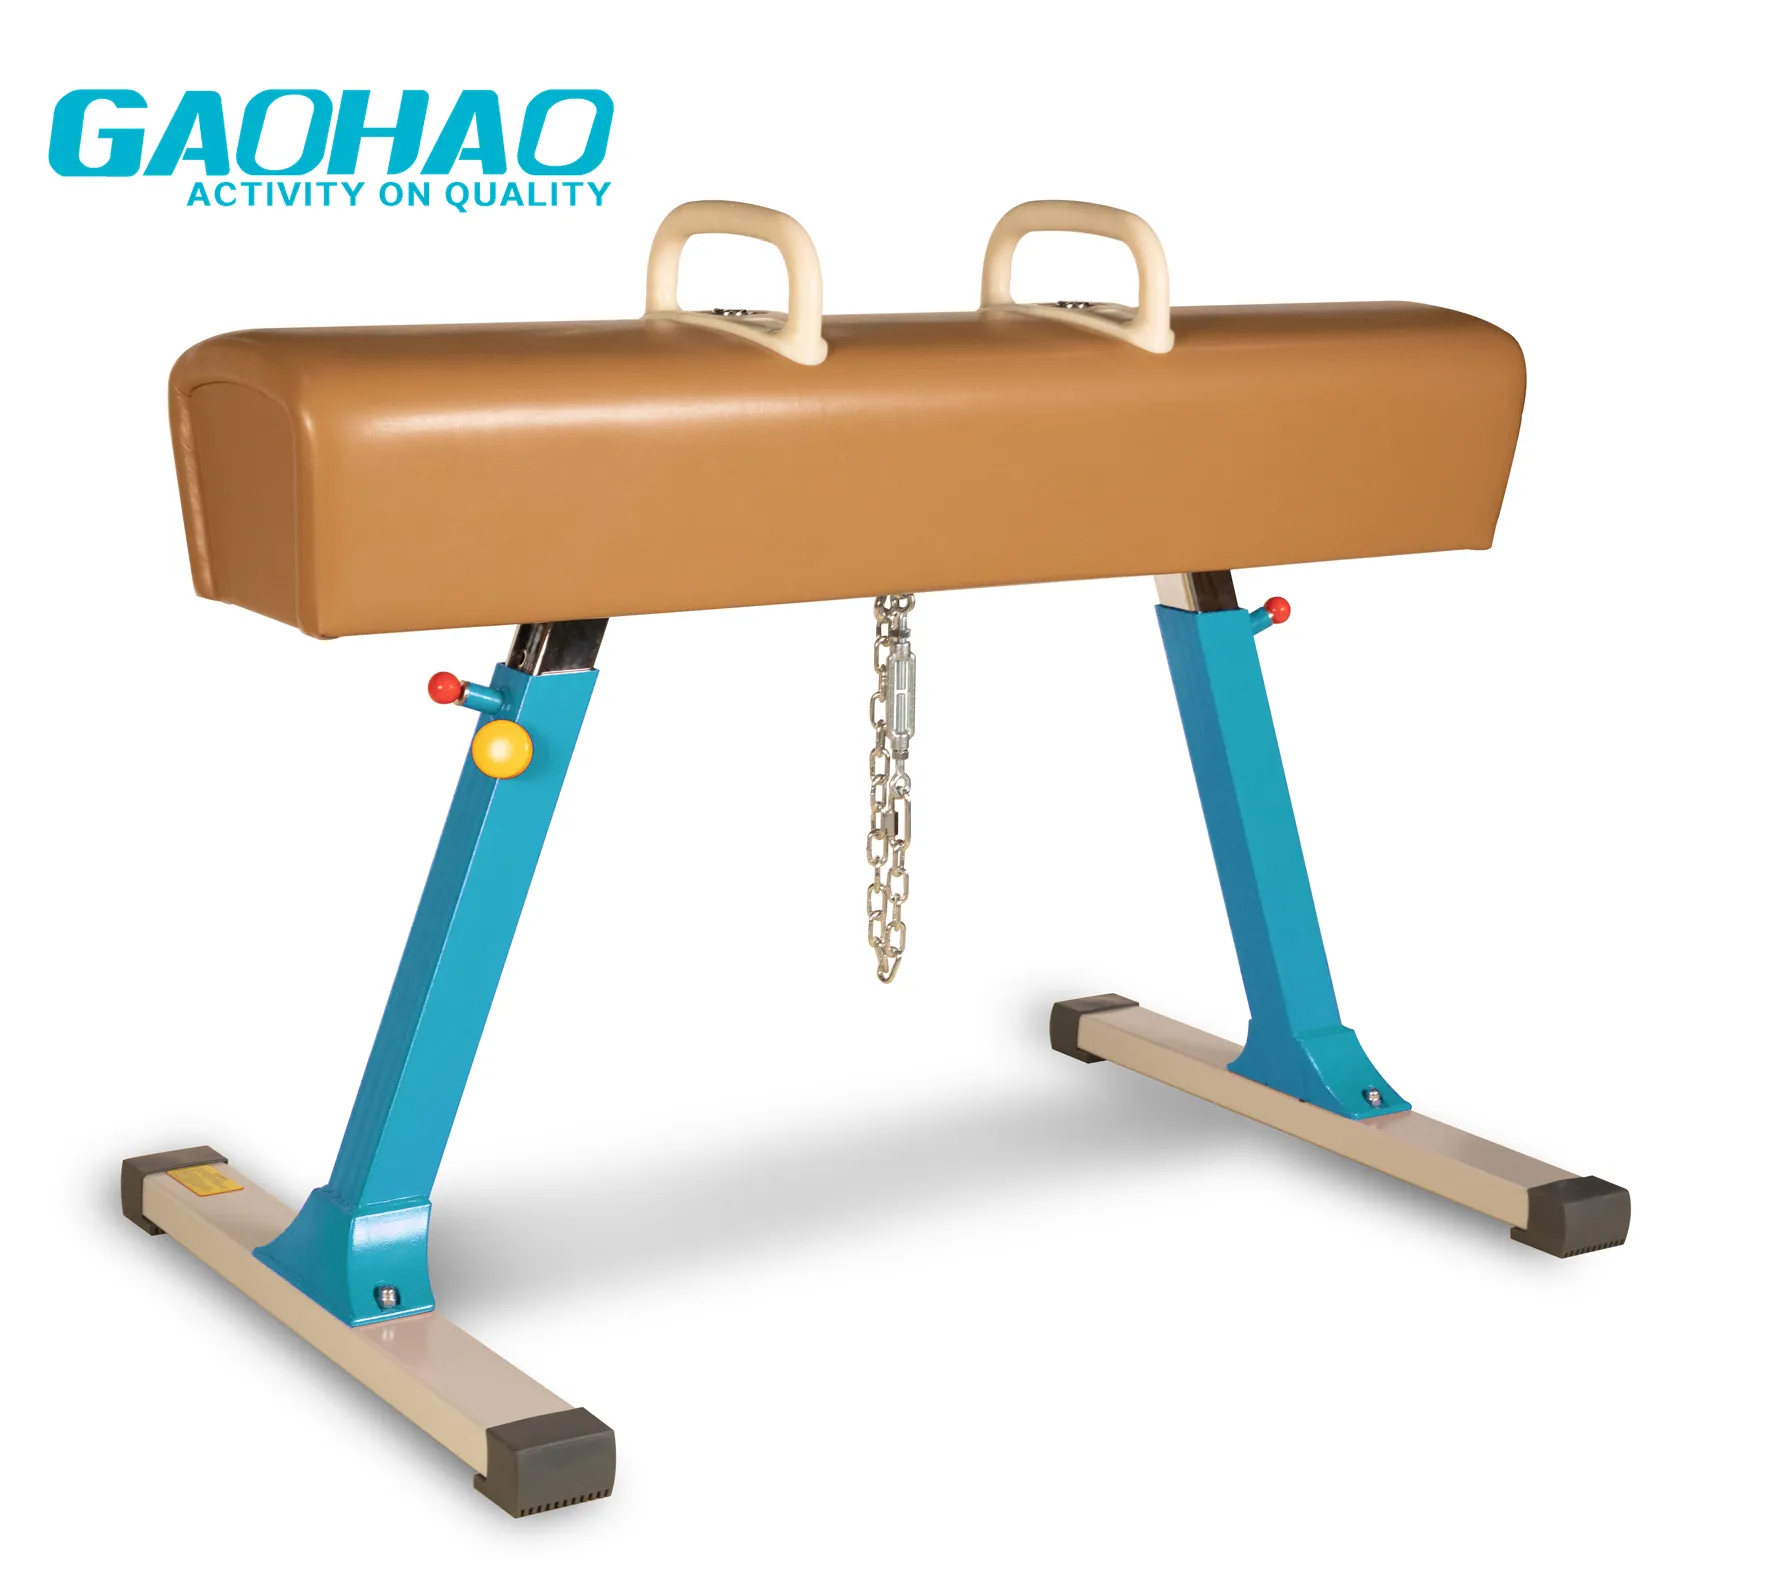 Gaohao rekabet Pommel at jimnastik spor vücut eğitimi pommel at bacak pedi